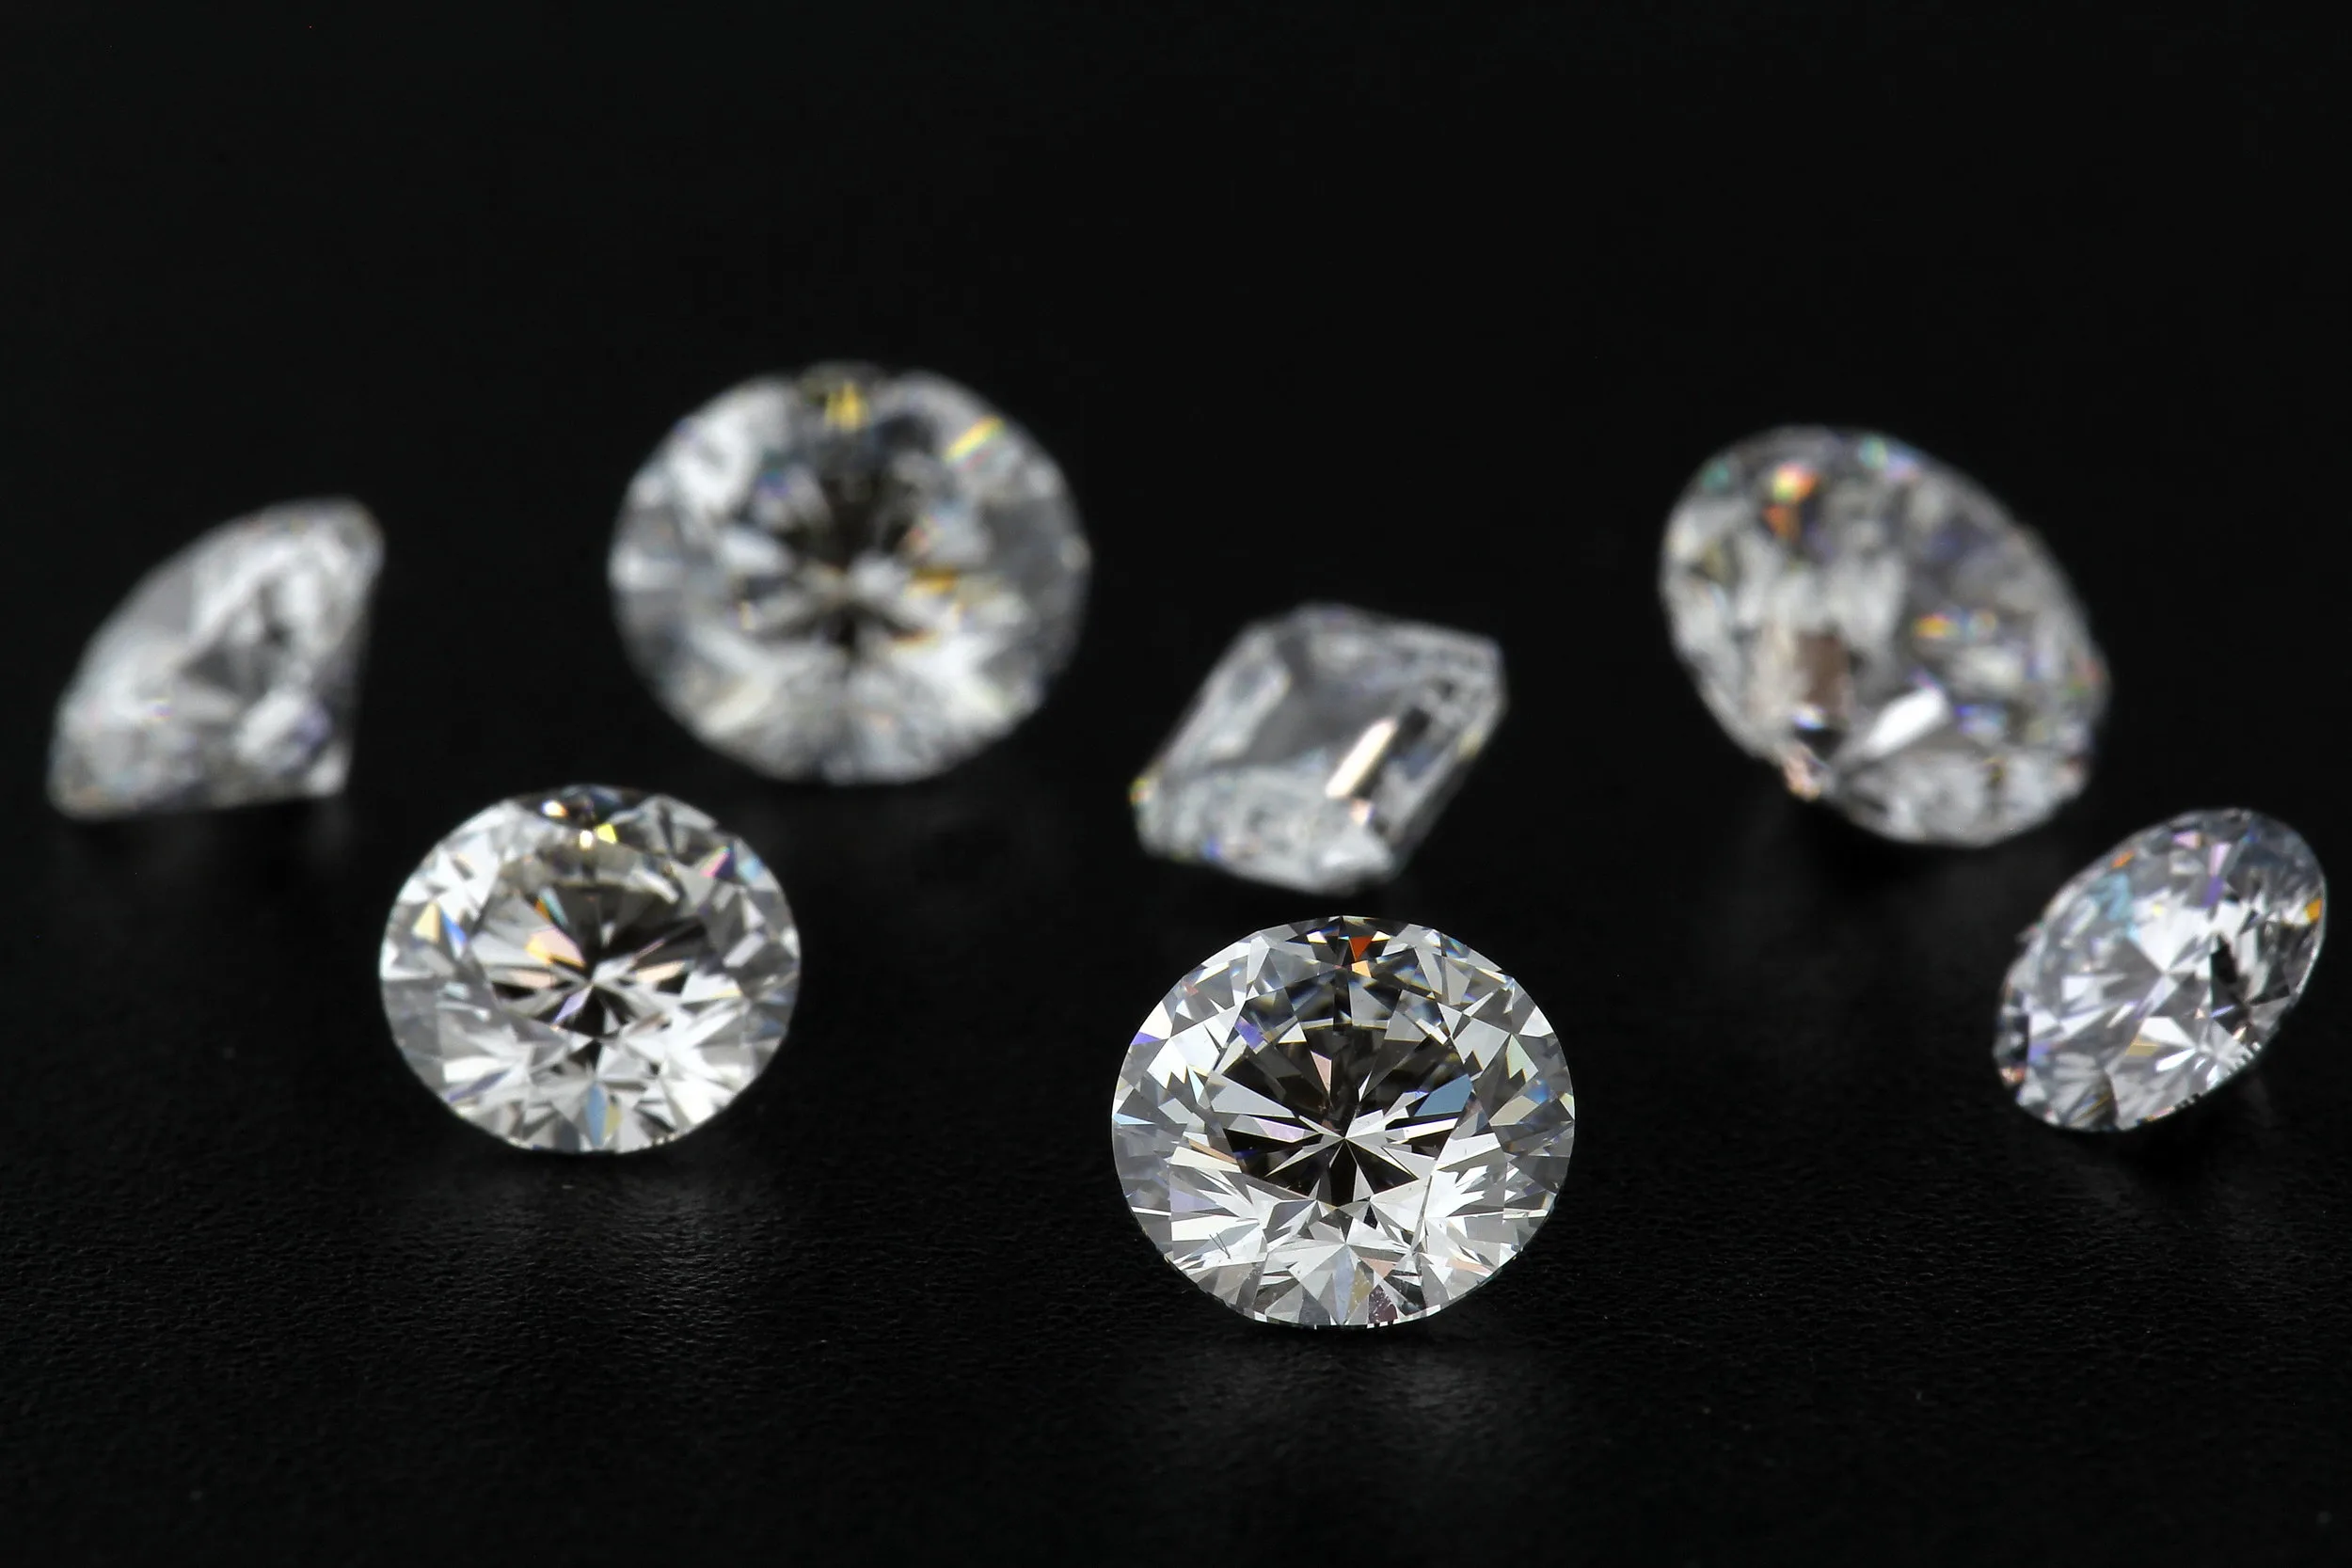 lab made diamonds